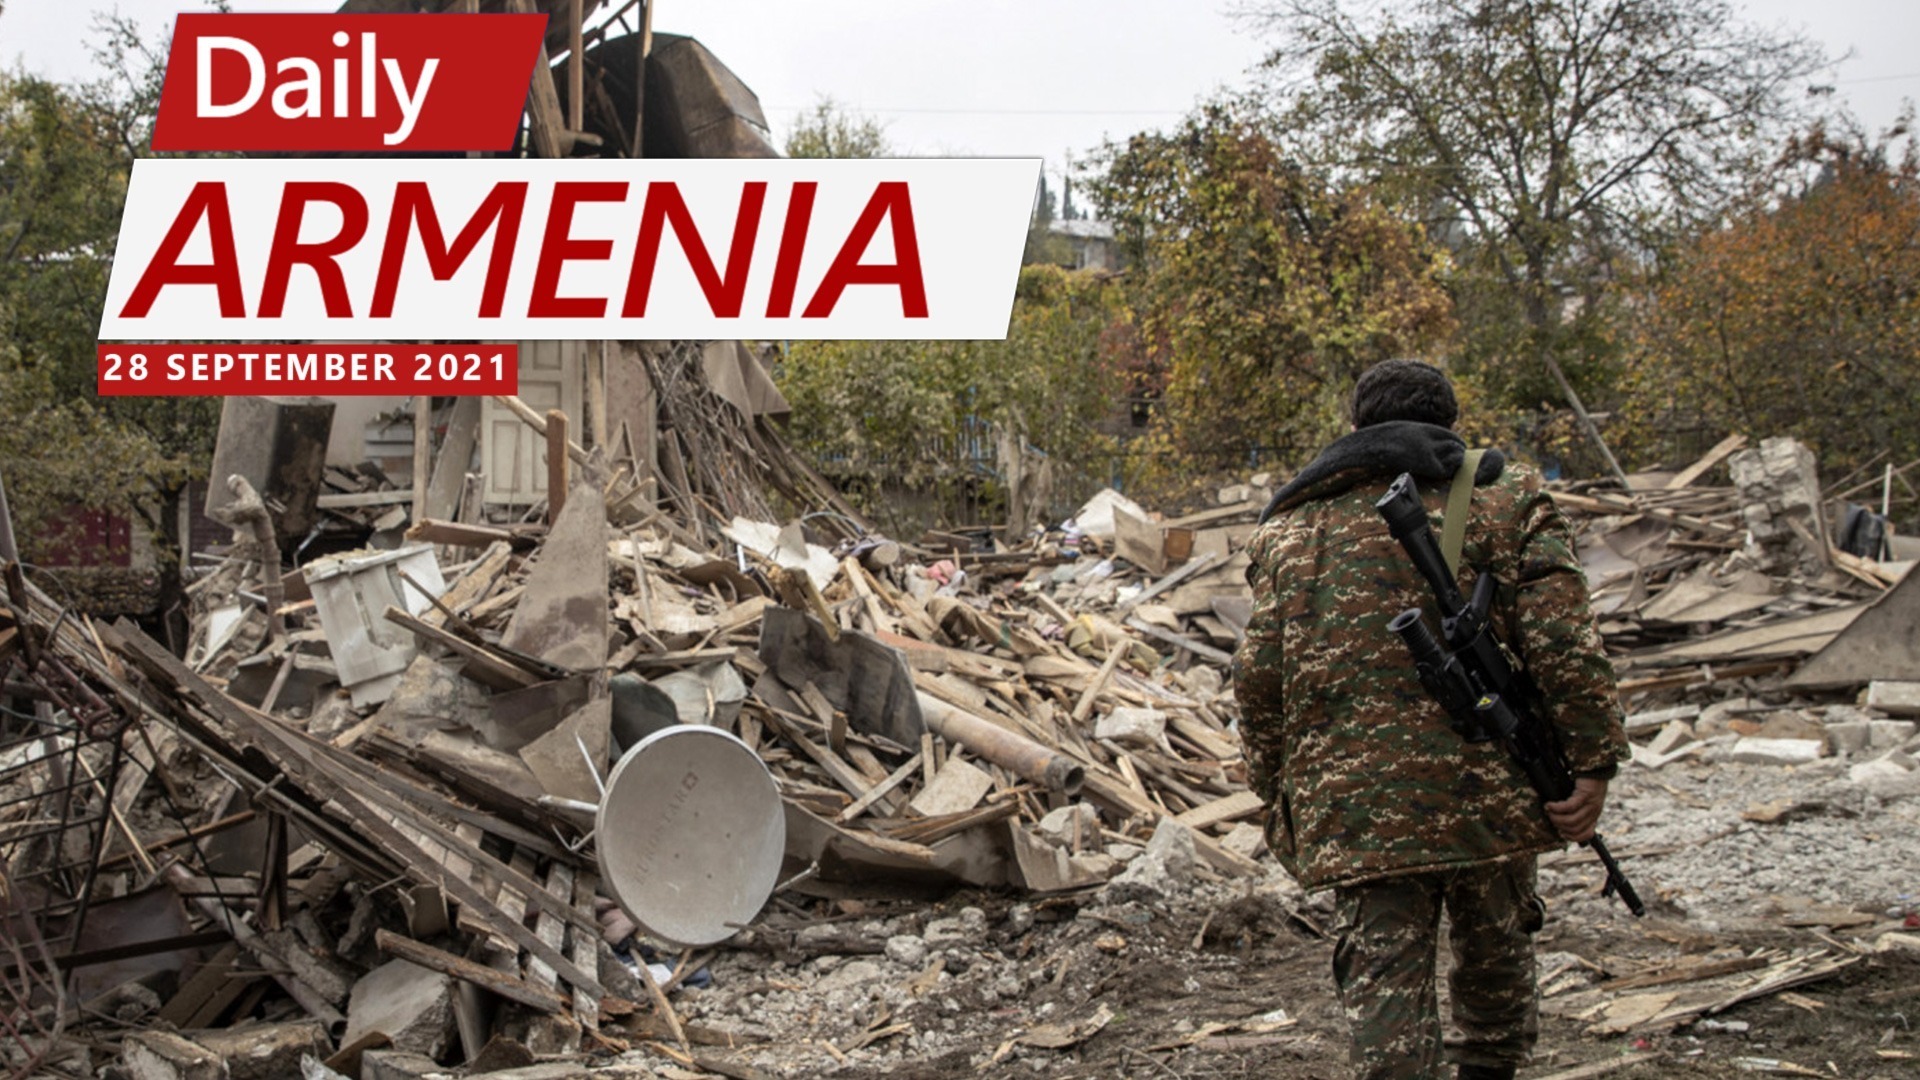 80 Armenian civilians killed by Azerbaijan during 2020 war, new report says